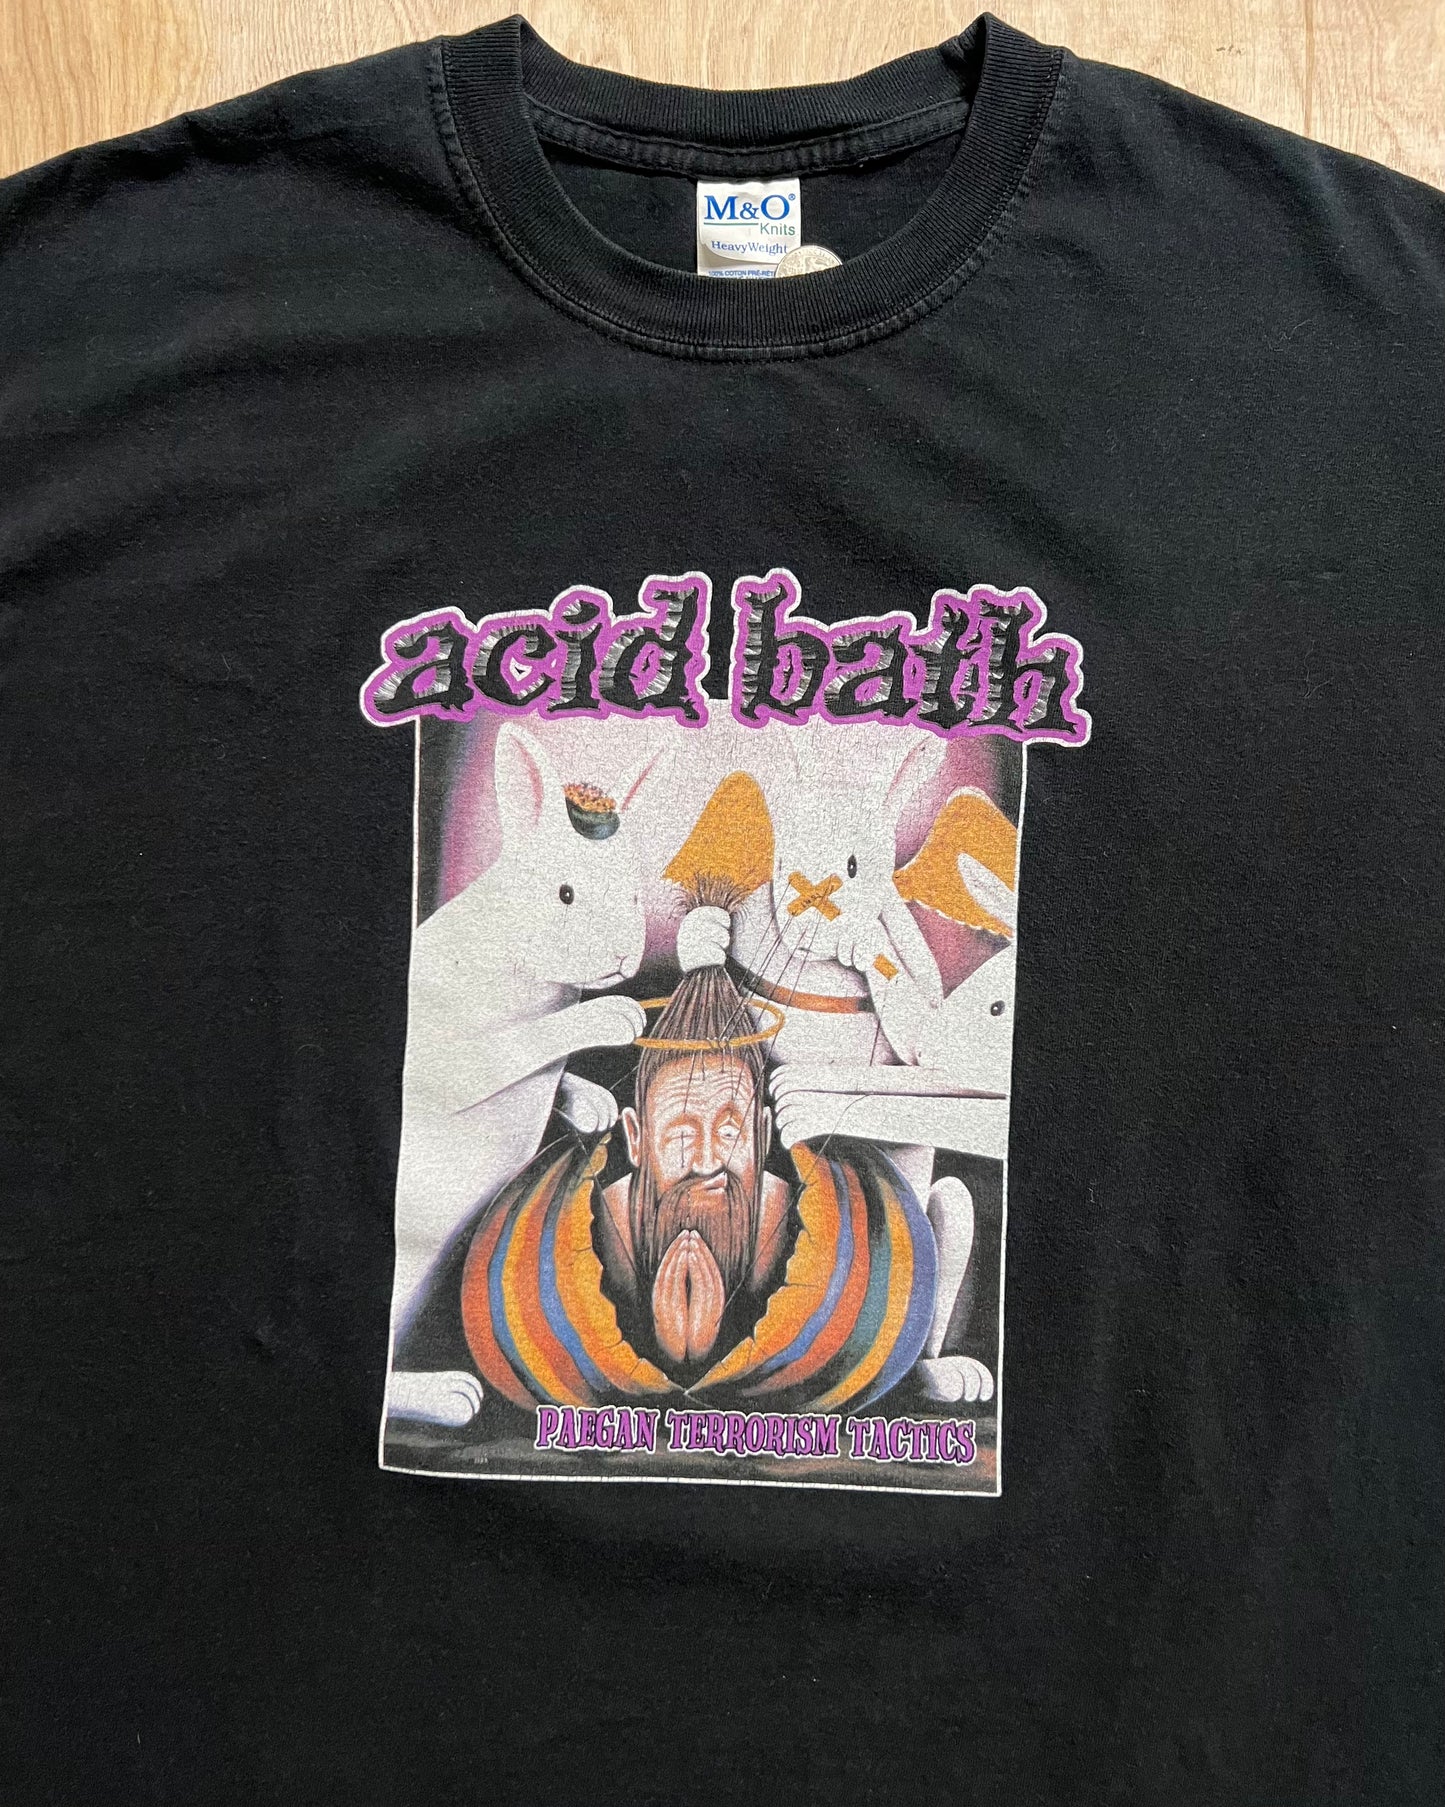 Y2K Acid Bath Concert T-Shirt